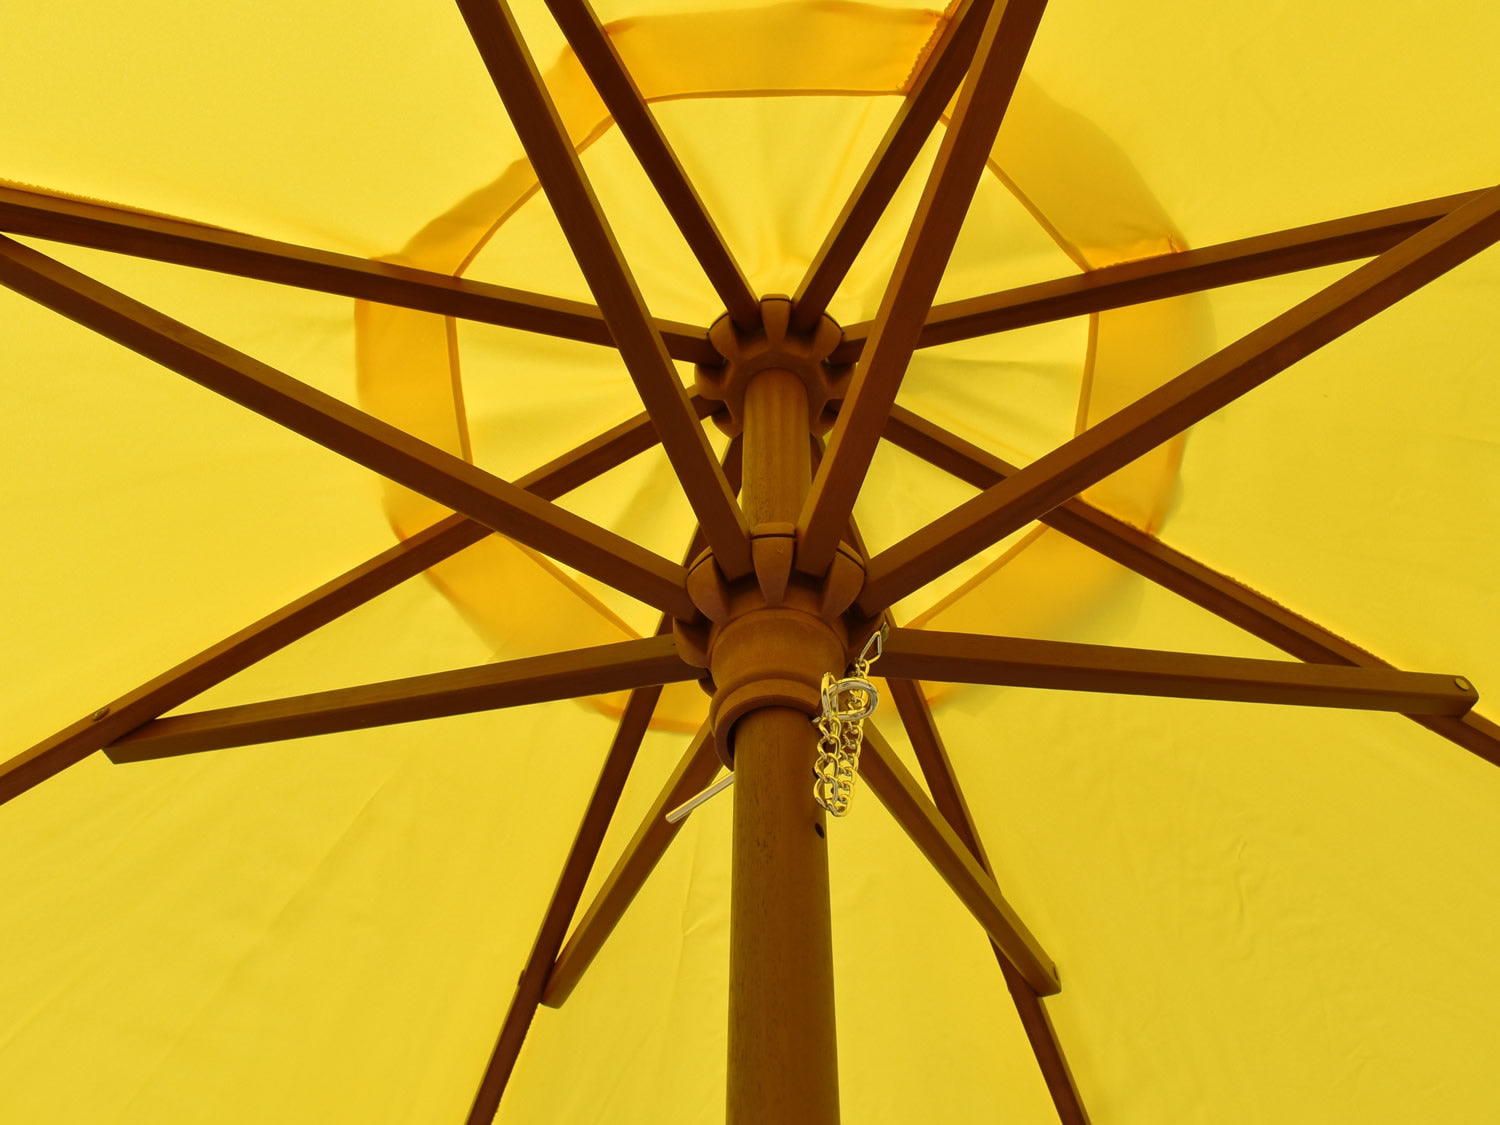 2m Octagonal parasol wooden underside struts